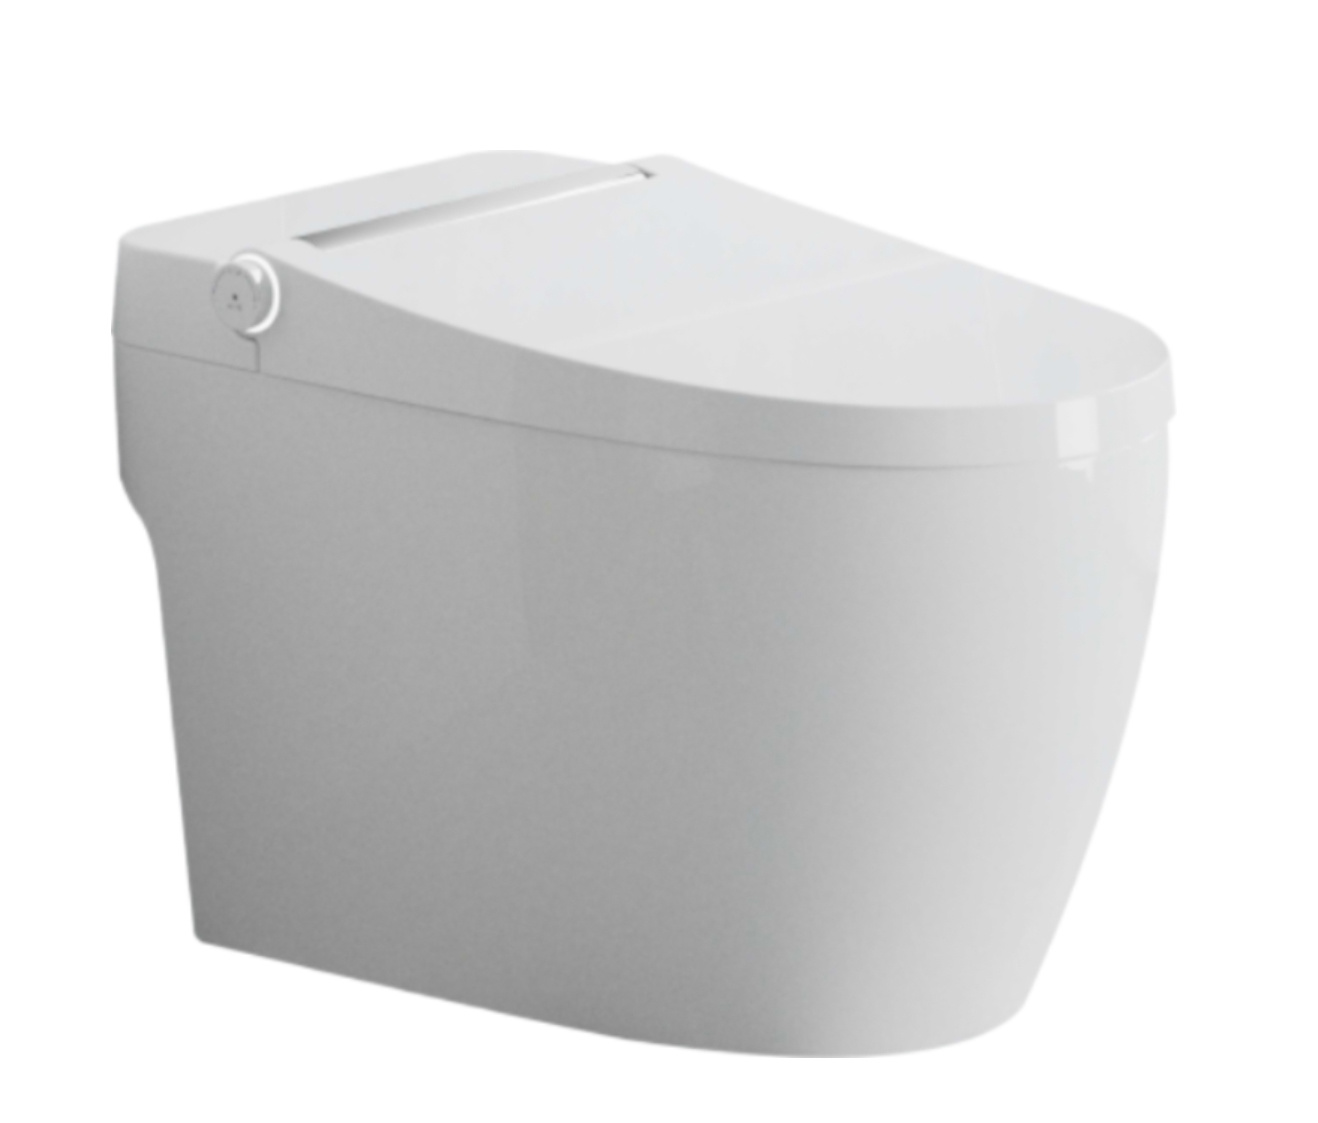 Intelligent smart toilet H-5001